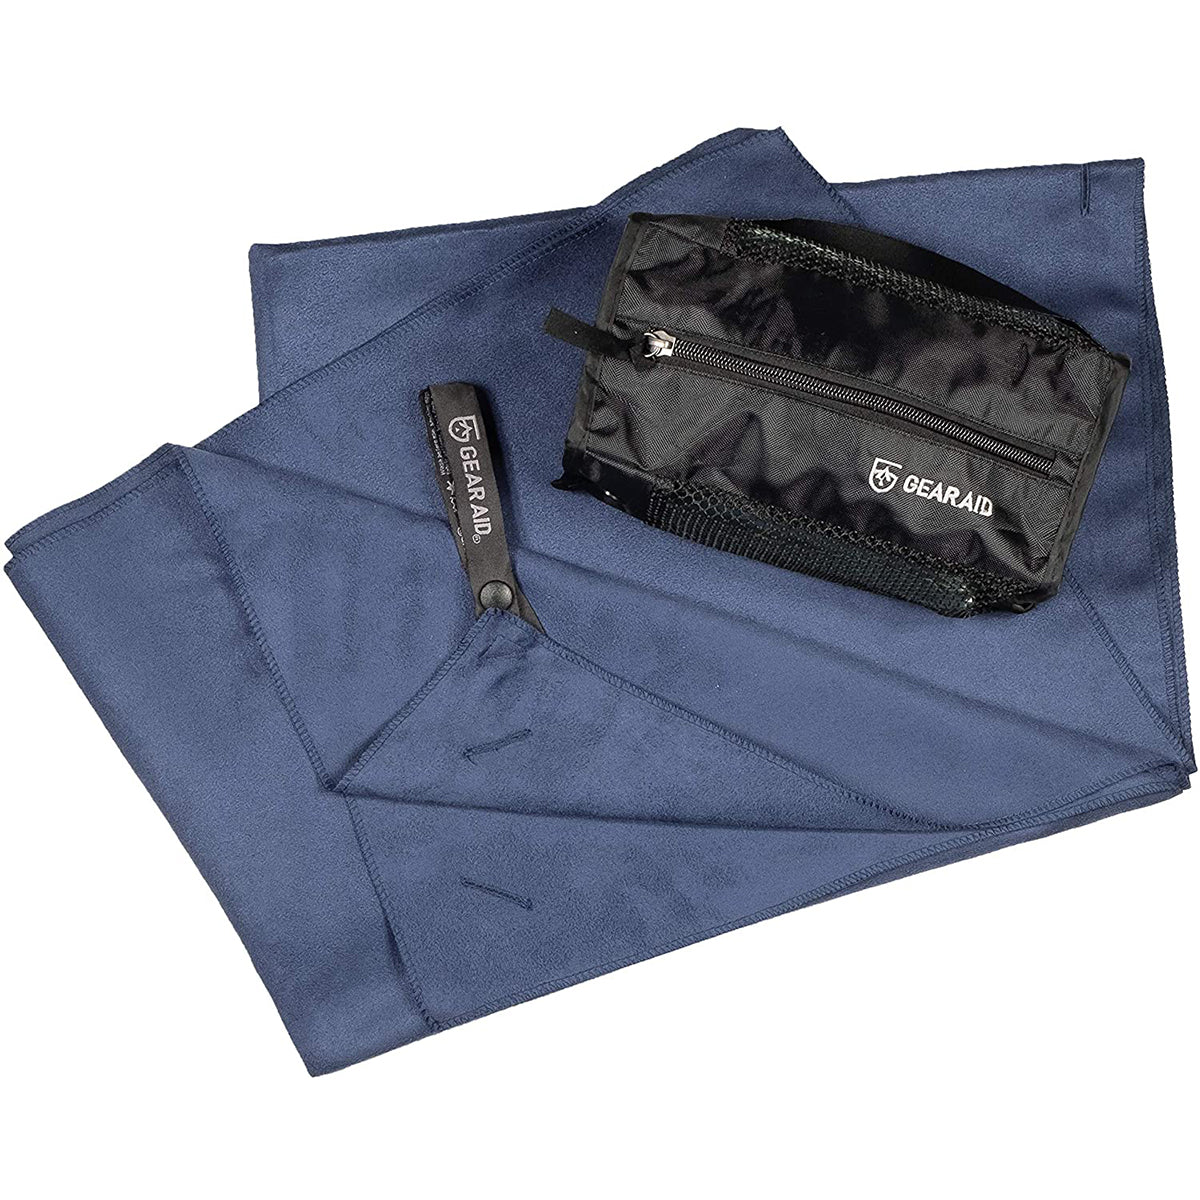 McNett Tactical Microfiber Ultra Compact Towel - Navy Blue Gear Aid